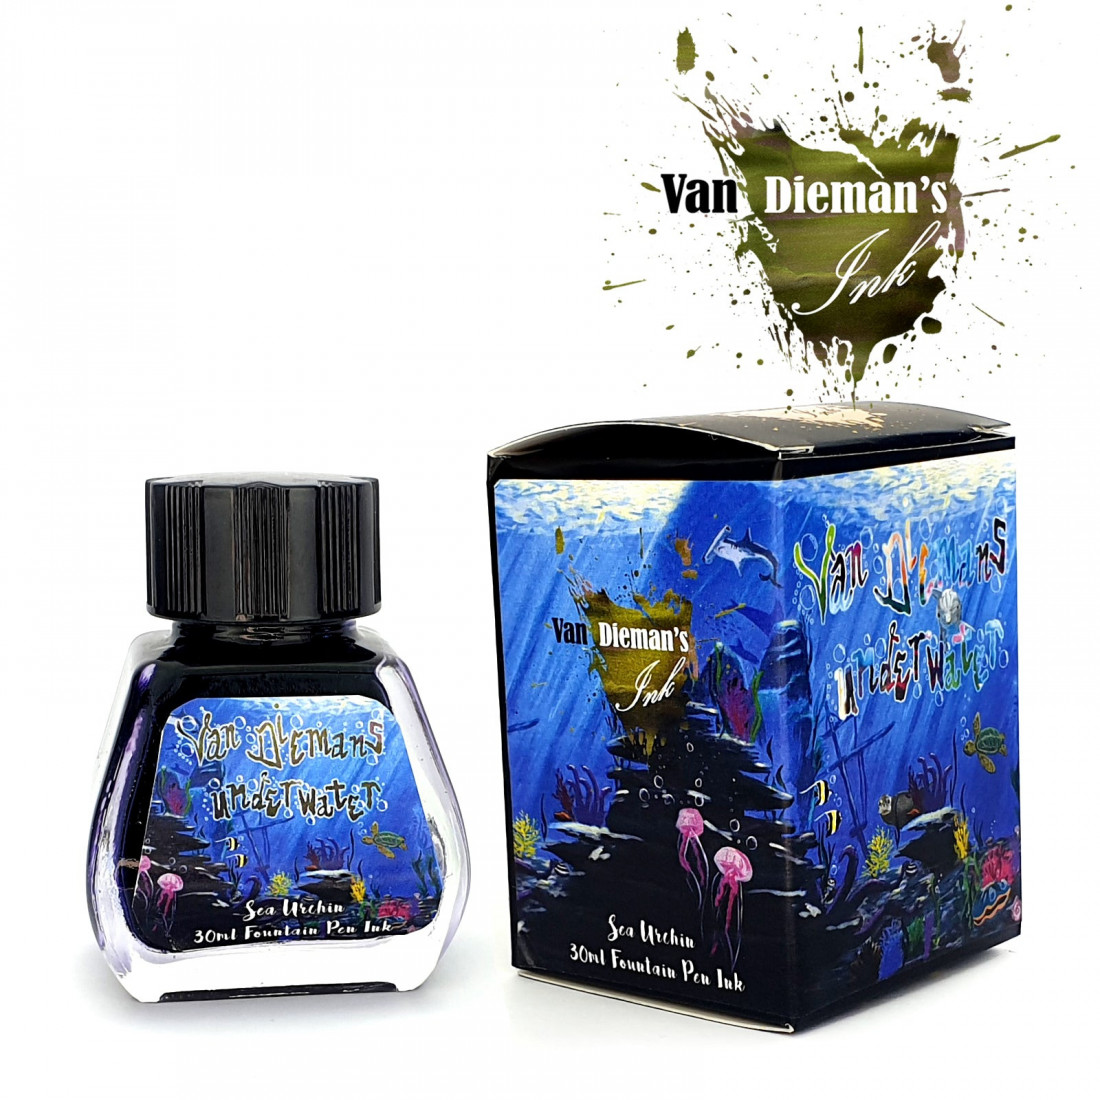 Van Diemans Underwater - Sea Urchin - Fountain Pen 30ml Ink